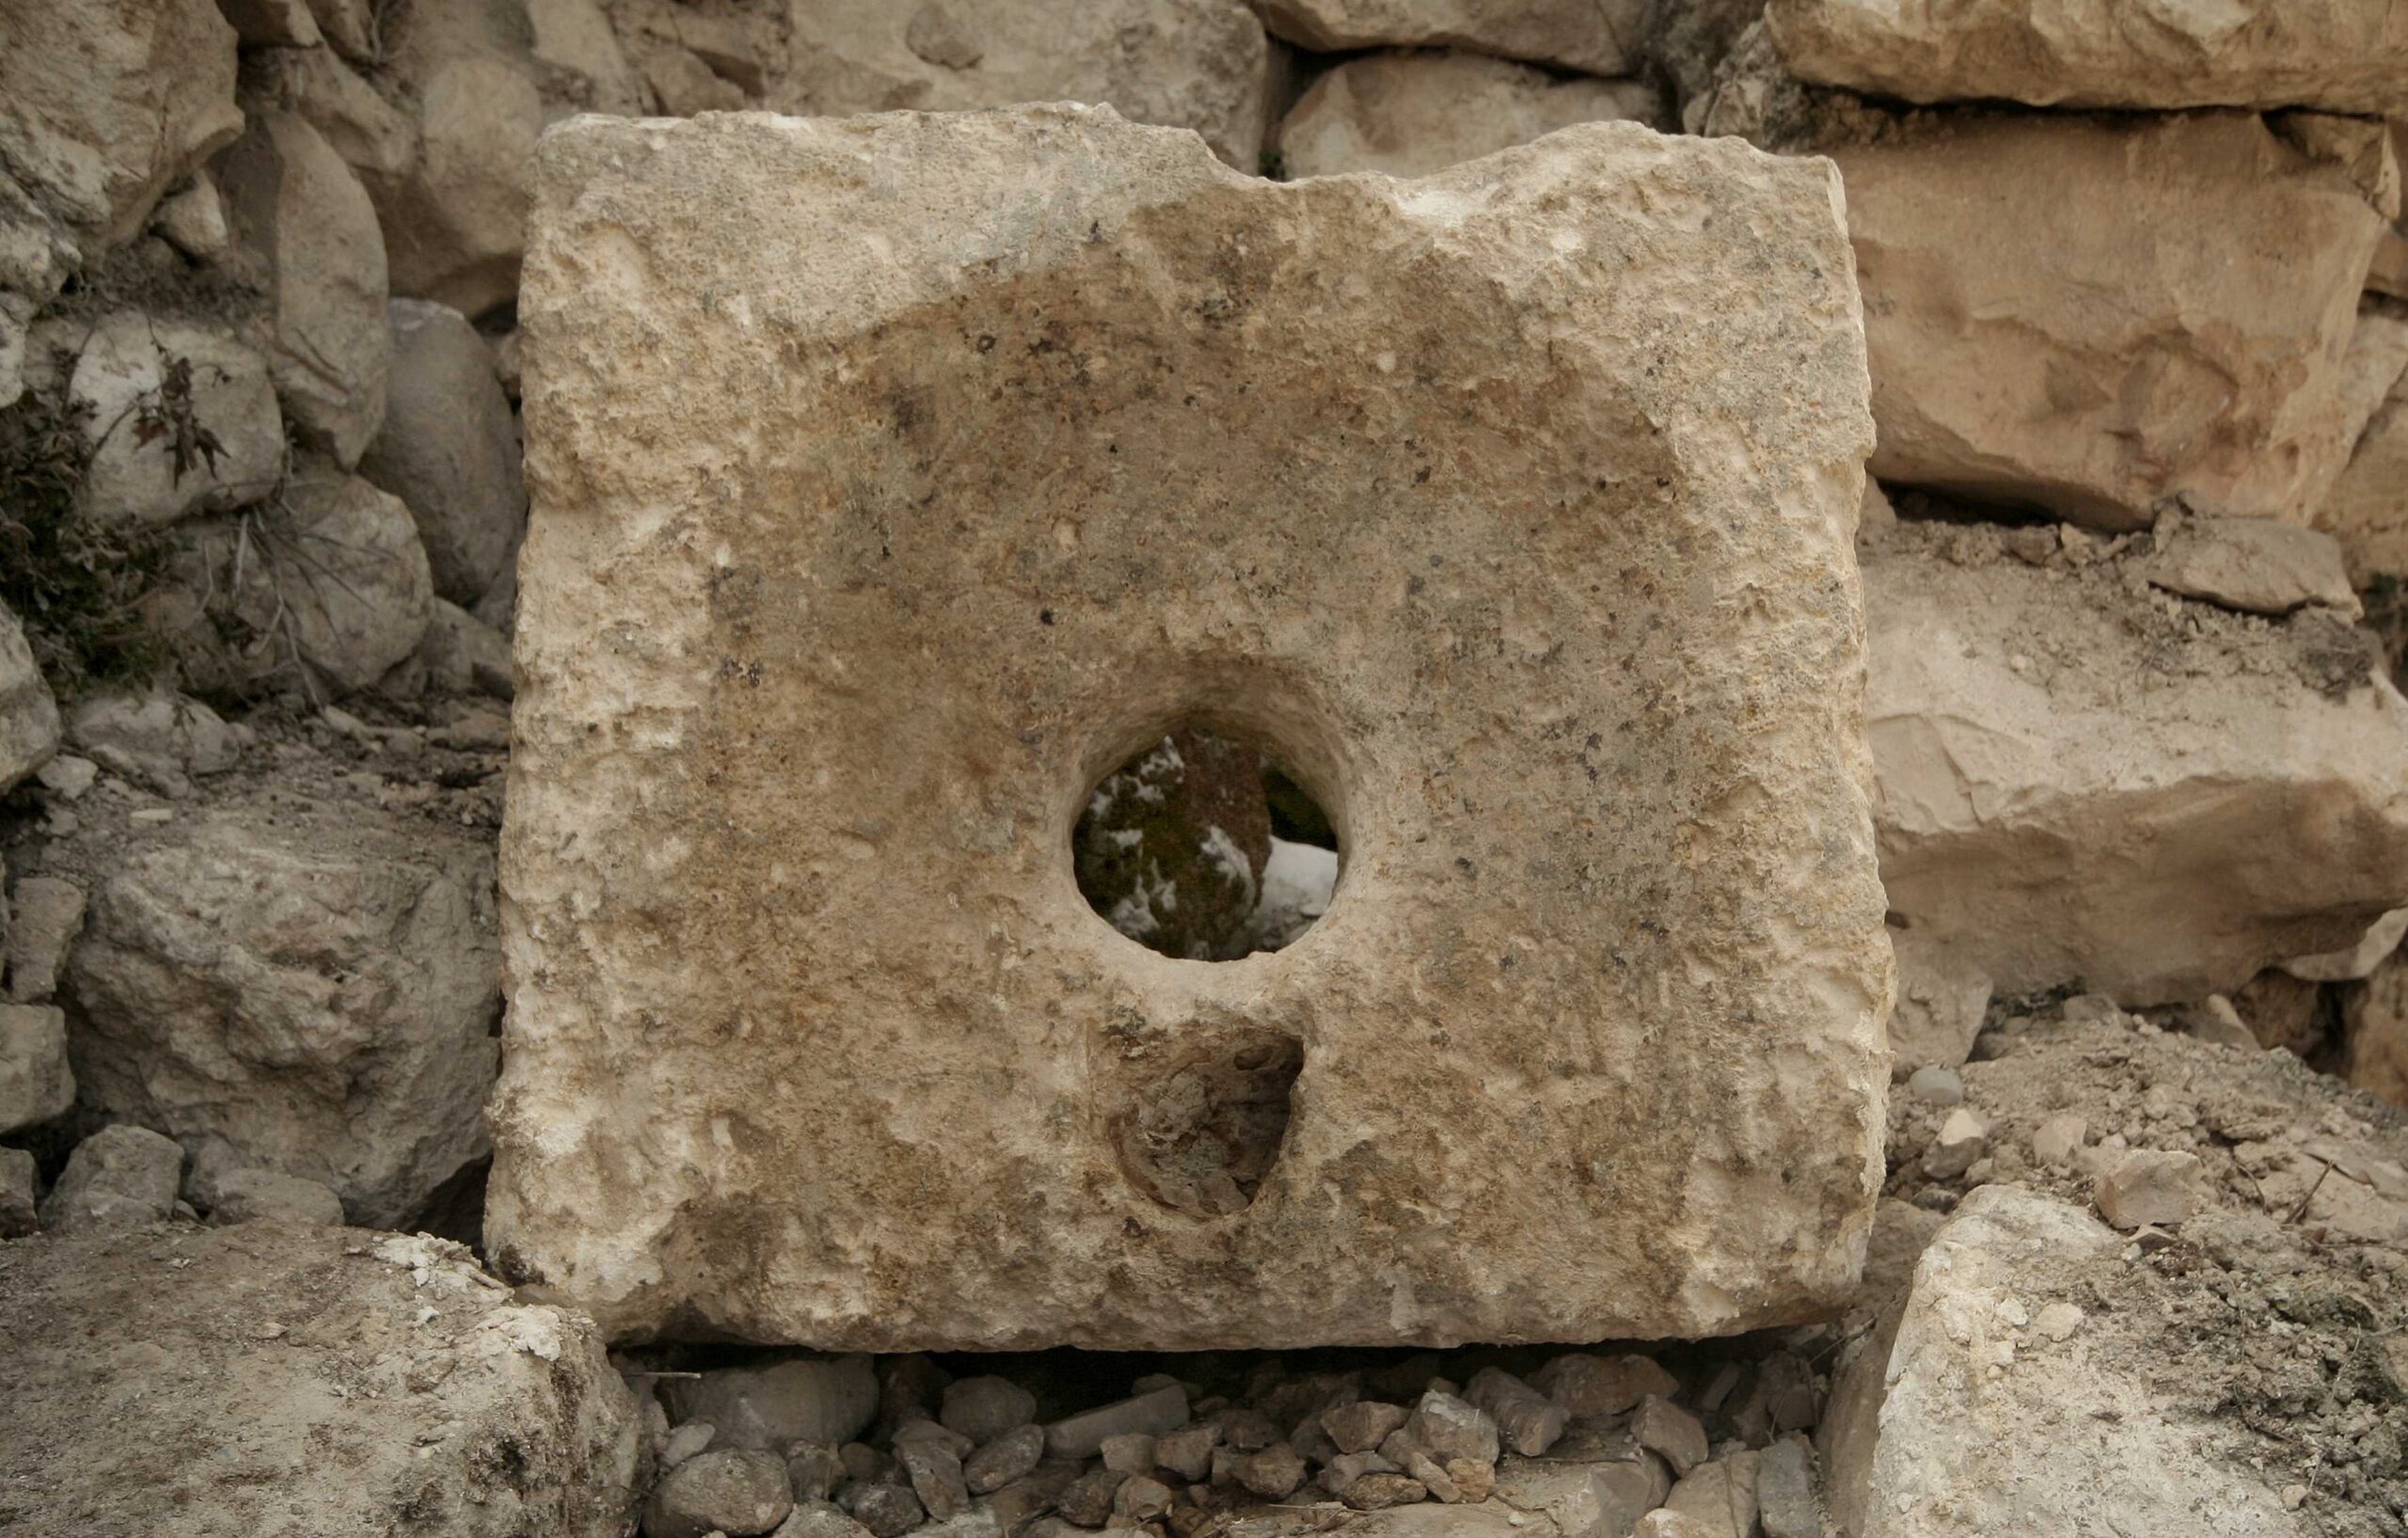 An ancient stone toilet that was discovered in Kiryat HaShelton in the city of David. Photo: Vladimir Naikhin